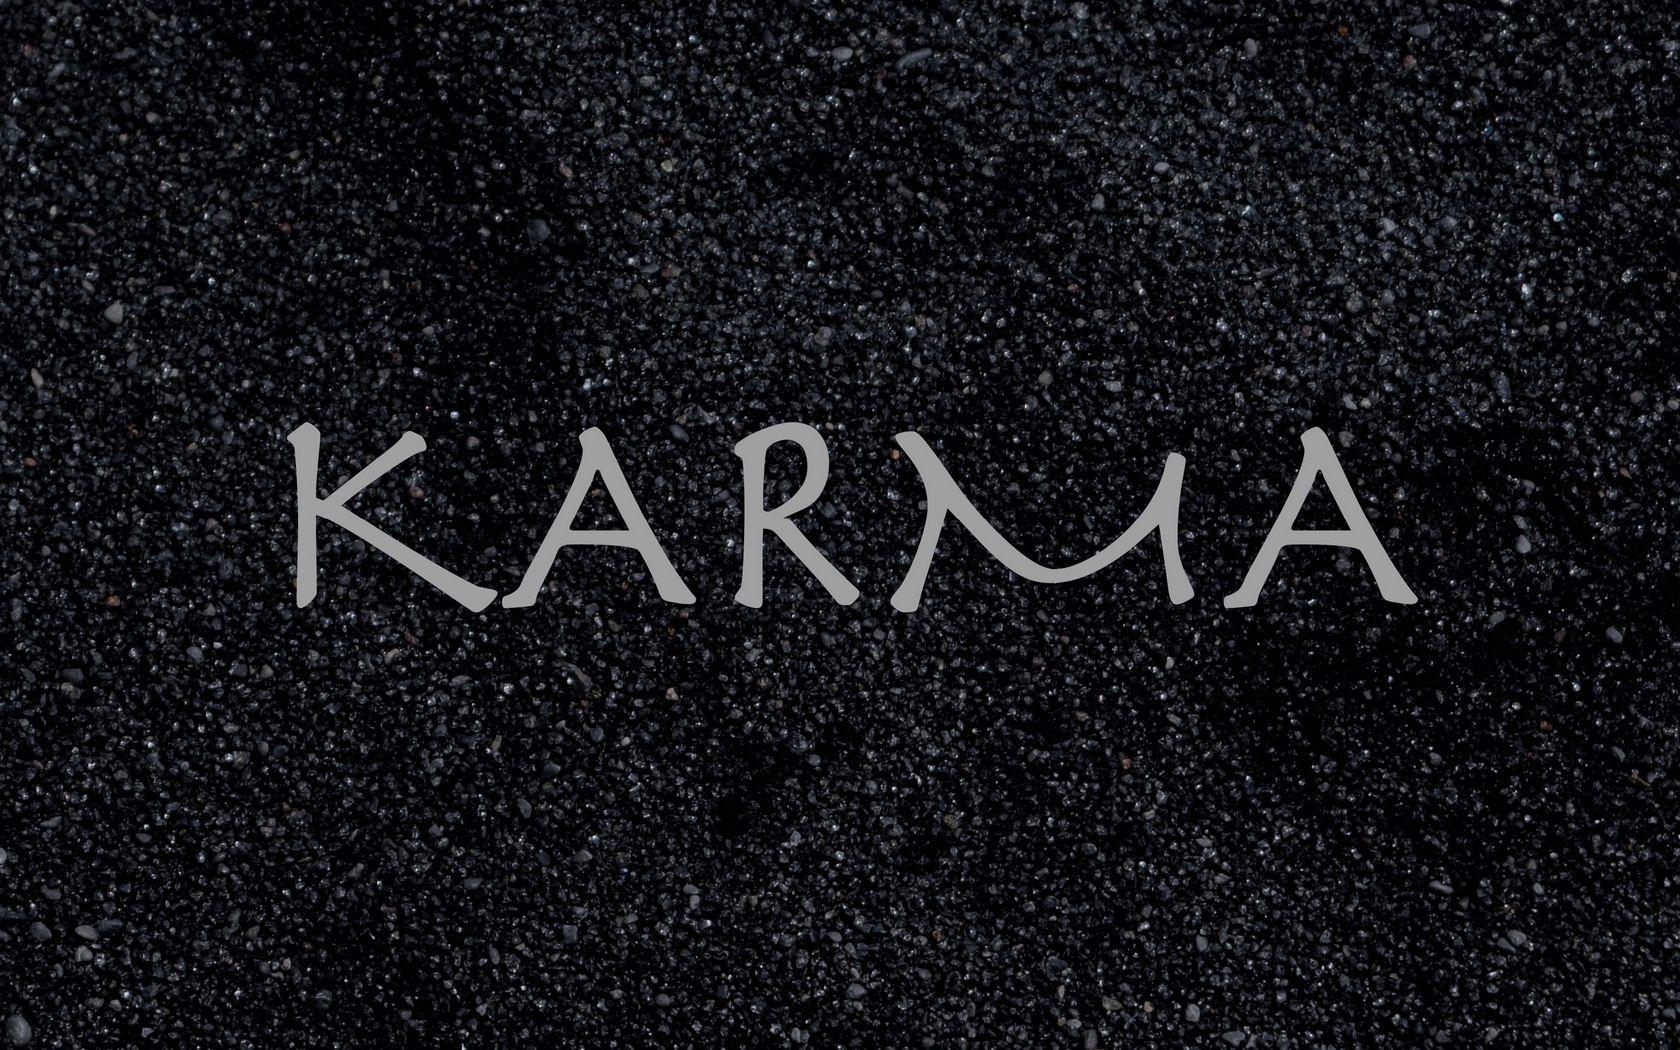  Karma Desktop Wallpapers Top Free Karma Desktop Backgrounds 